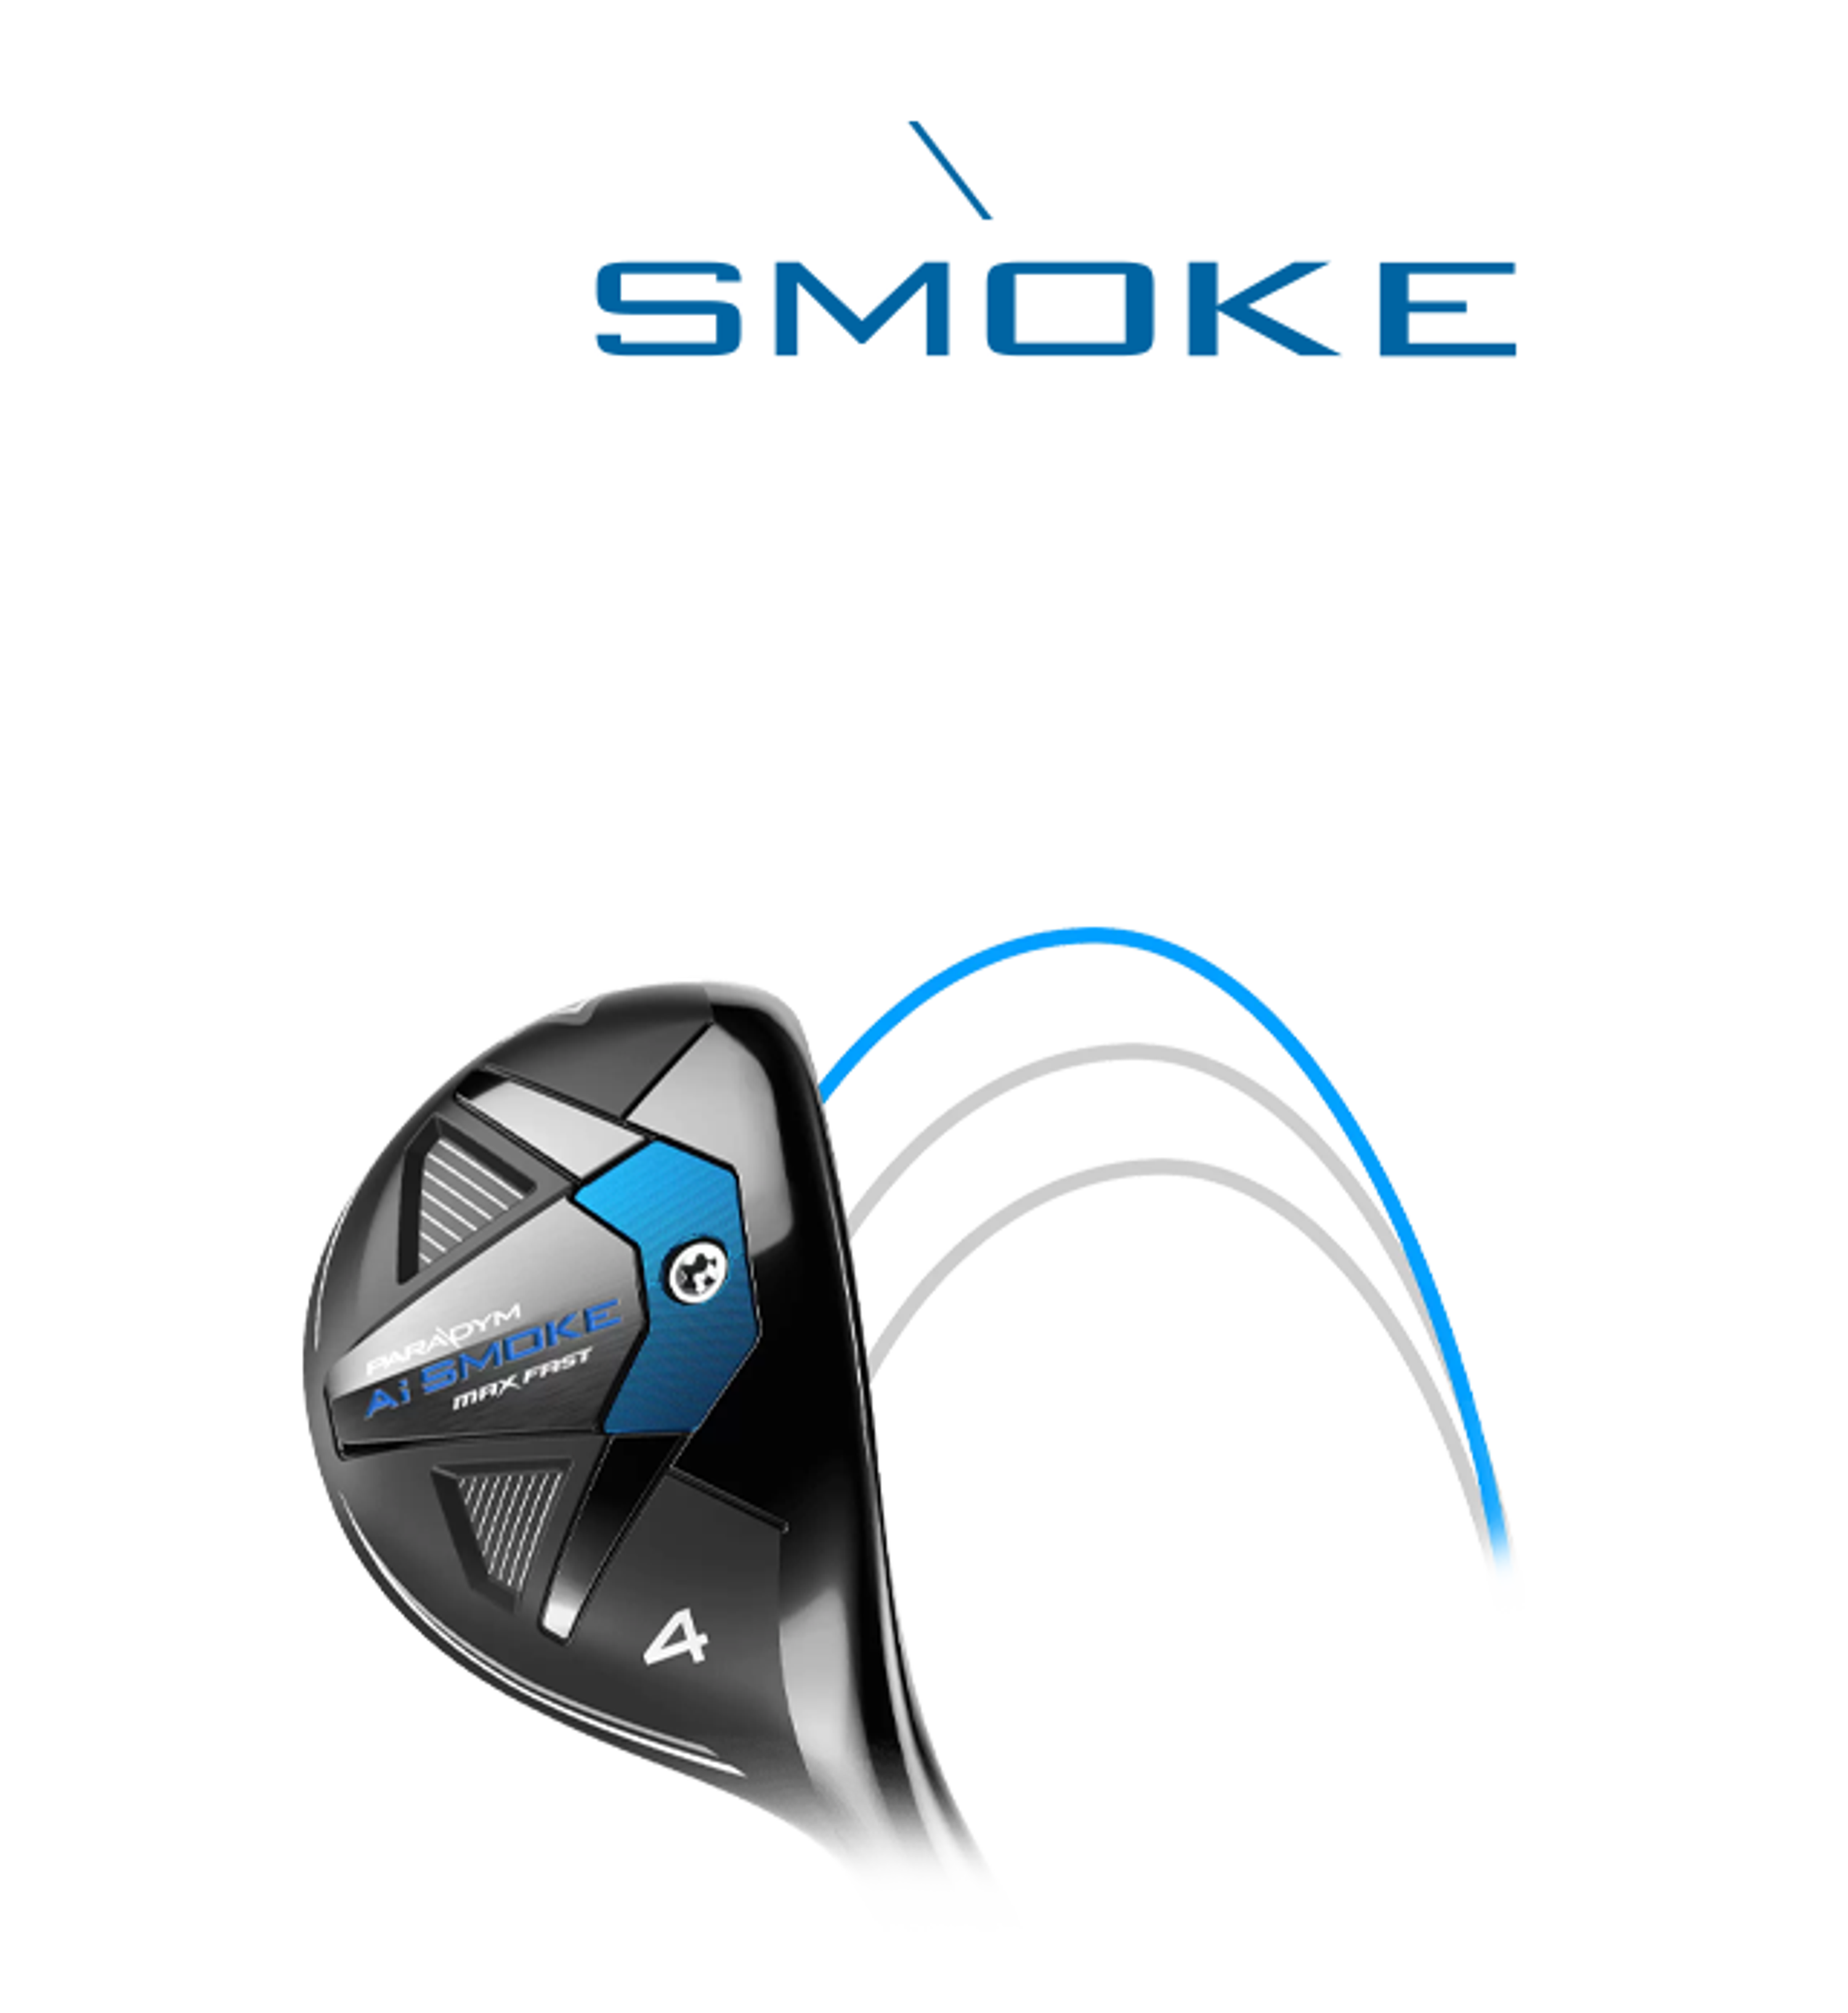 paradym ai smoke max fast hybrid face - lightweight performance